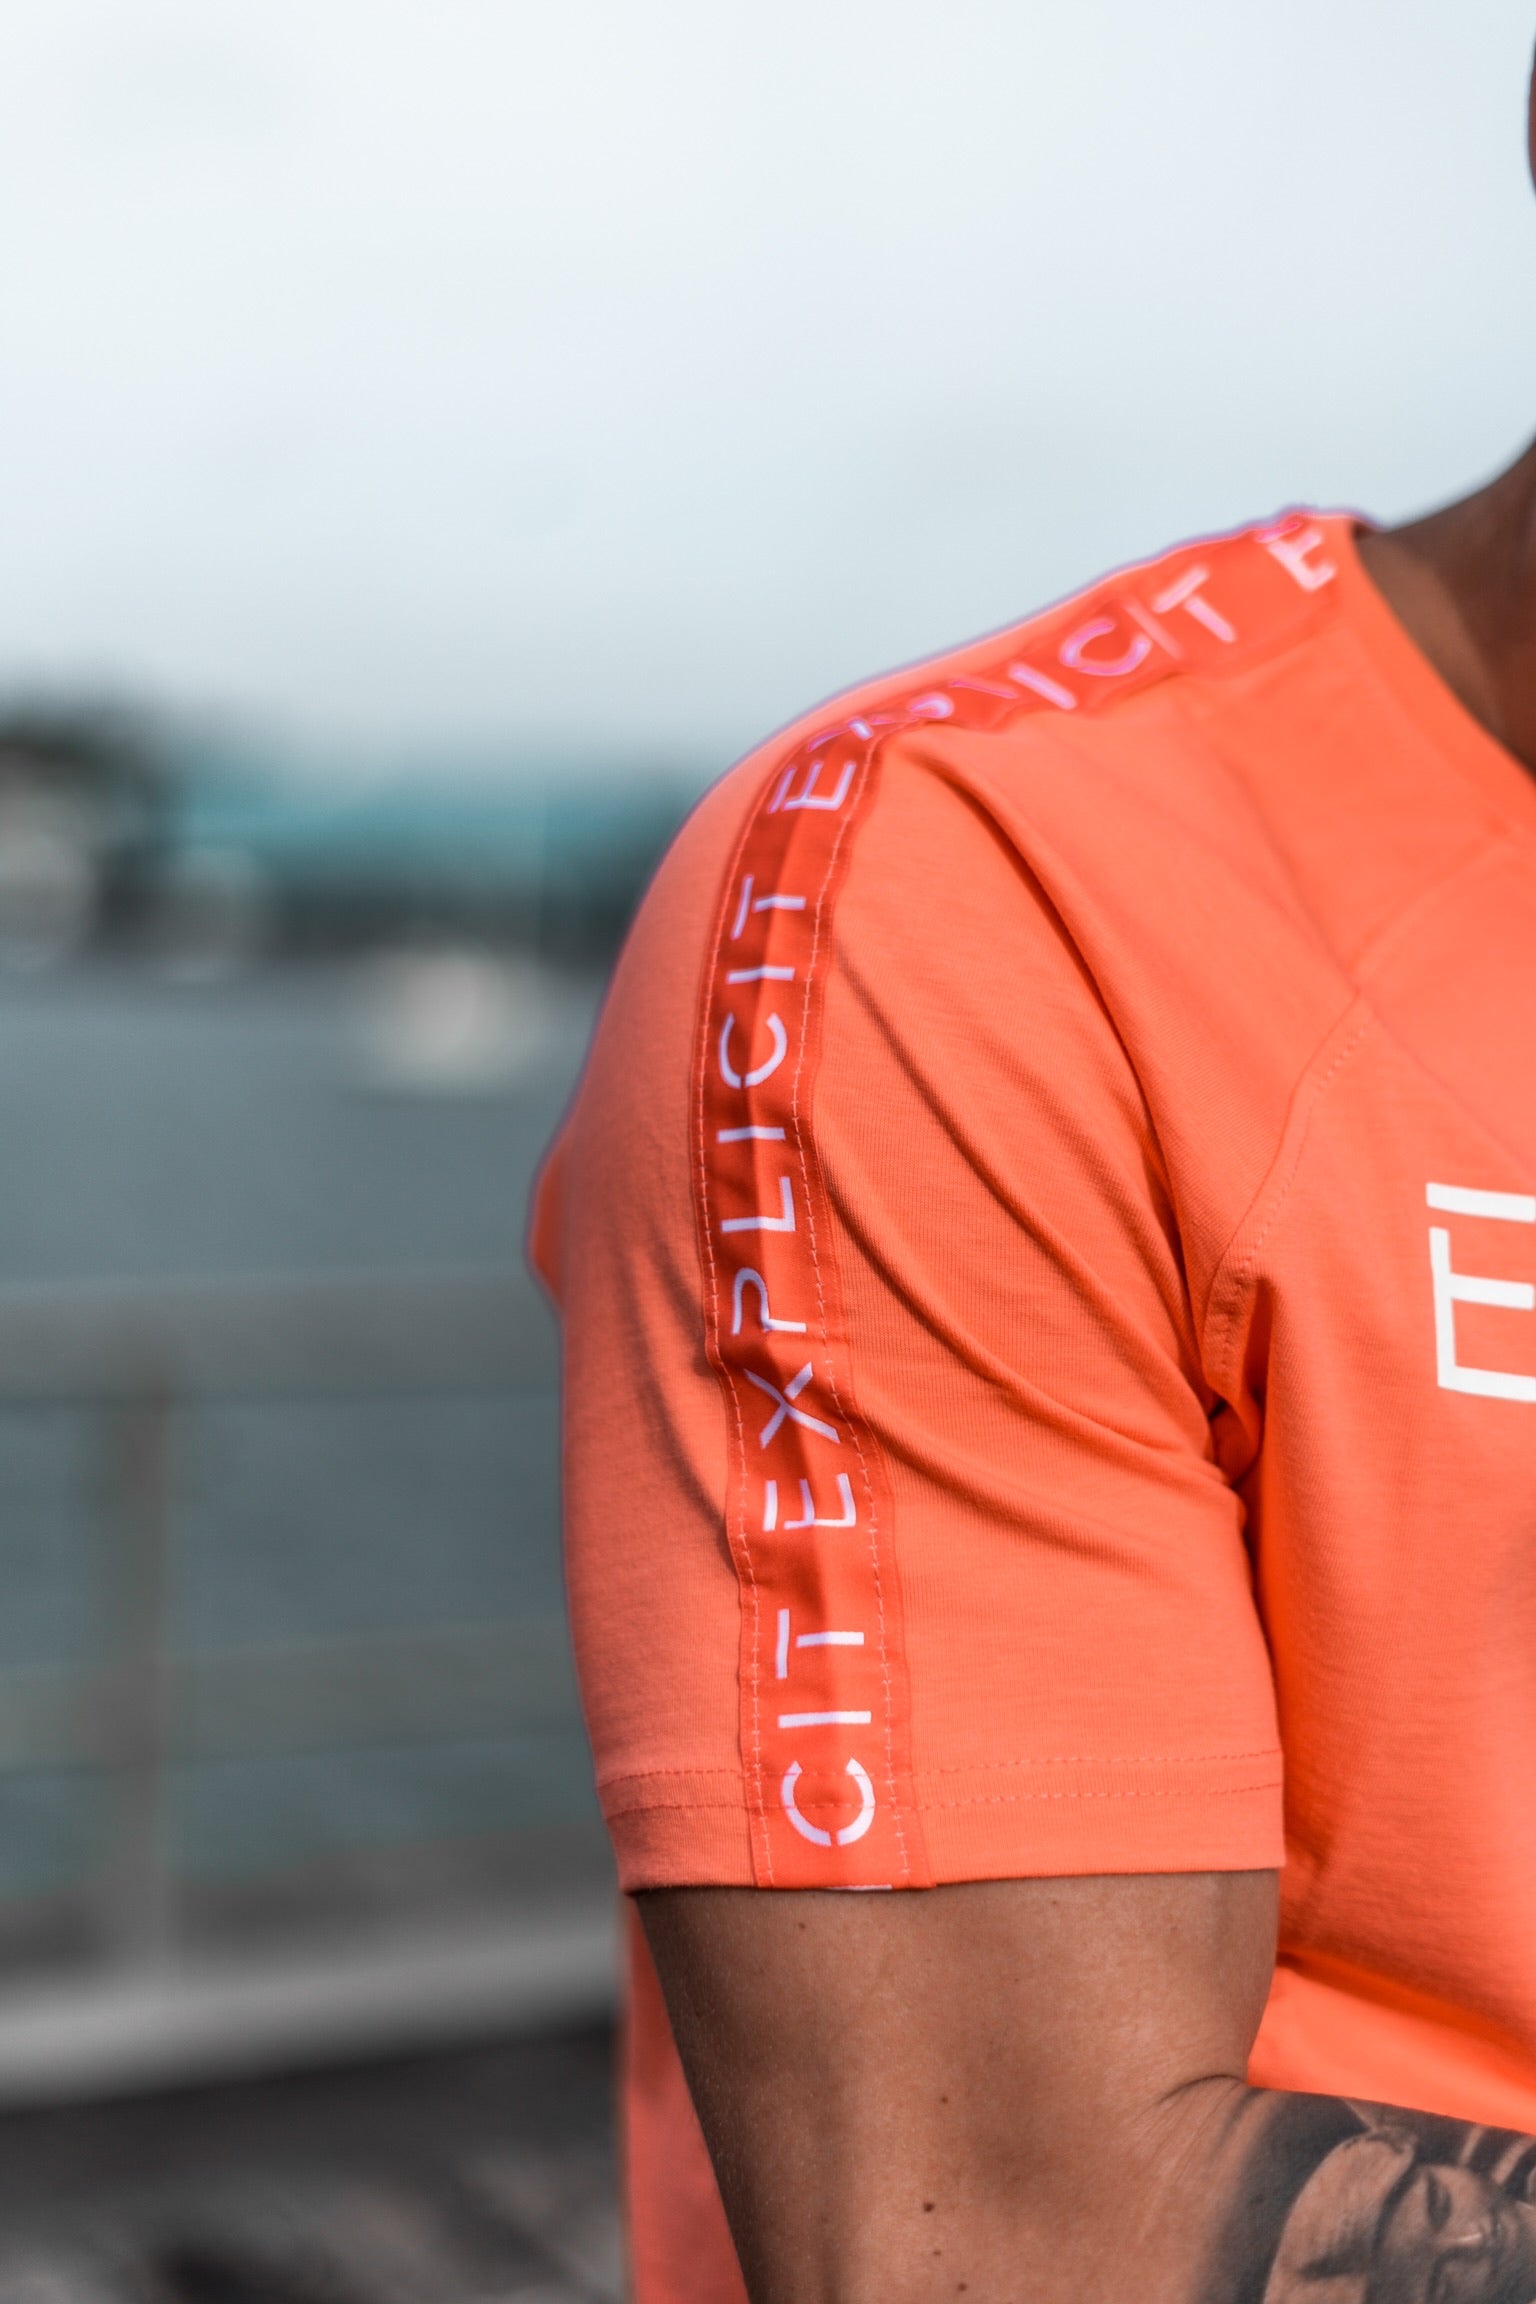 Polder T Shirt - Coral Orange - Explicit clothing